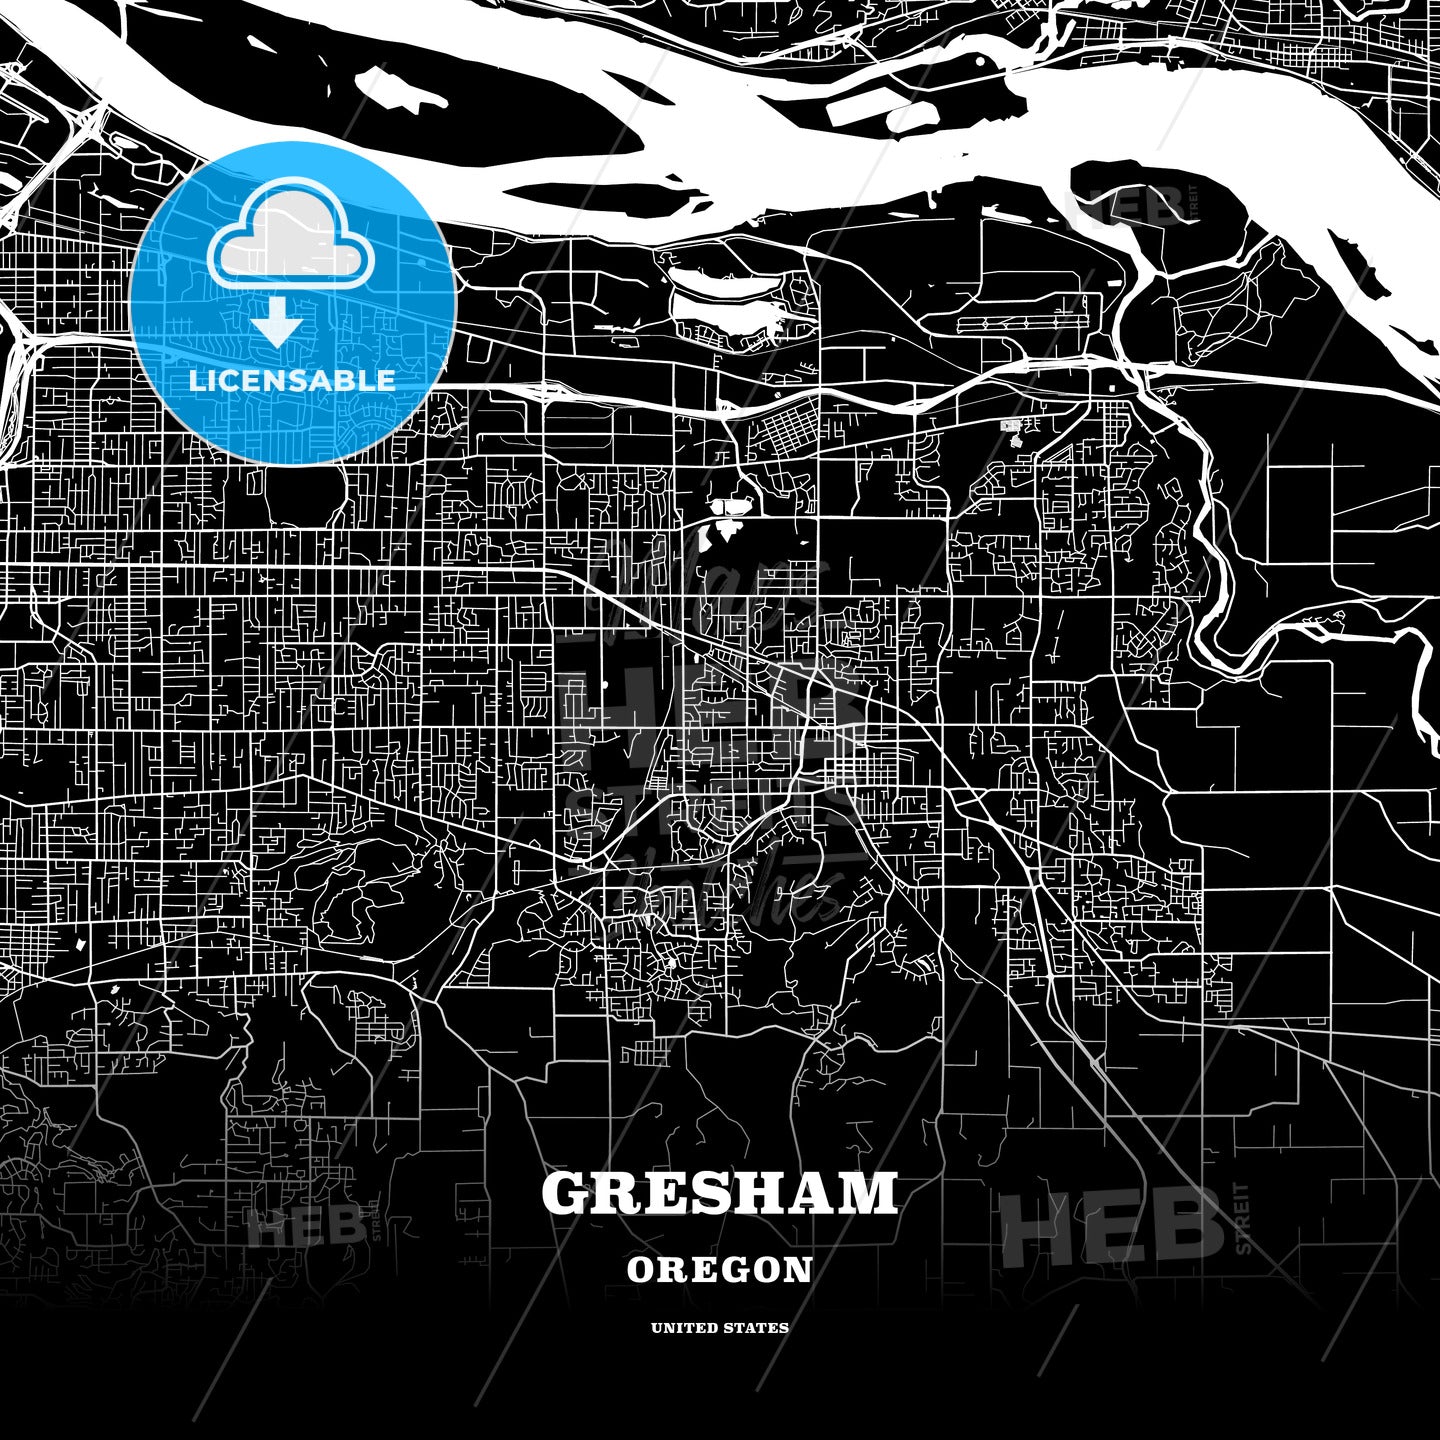 Gresham, Oregon, USA map